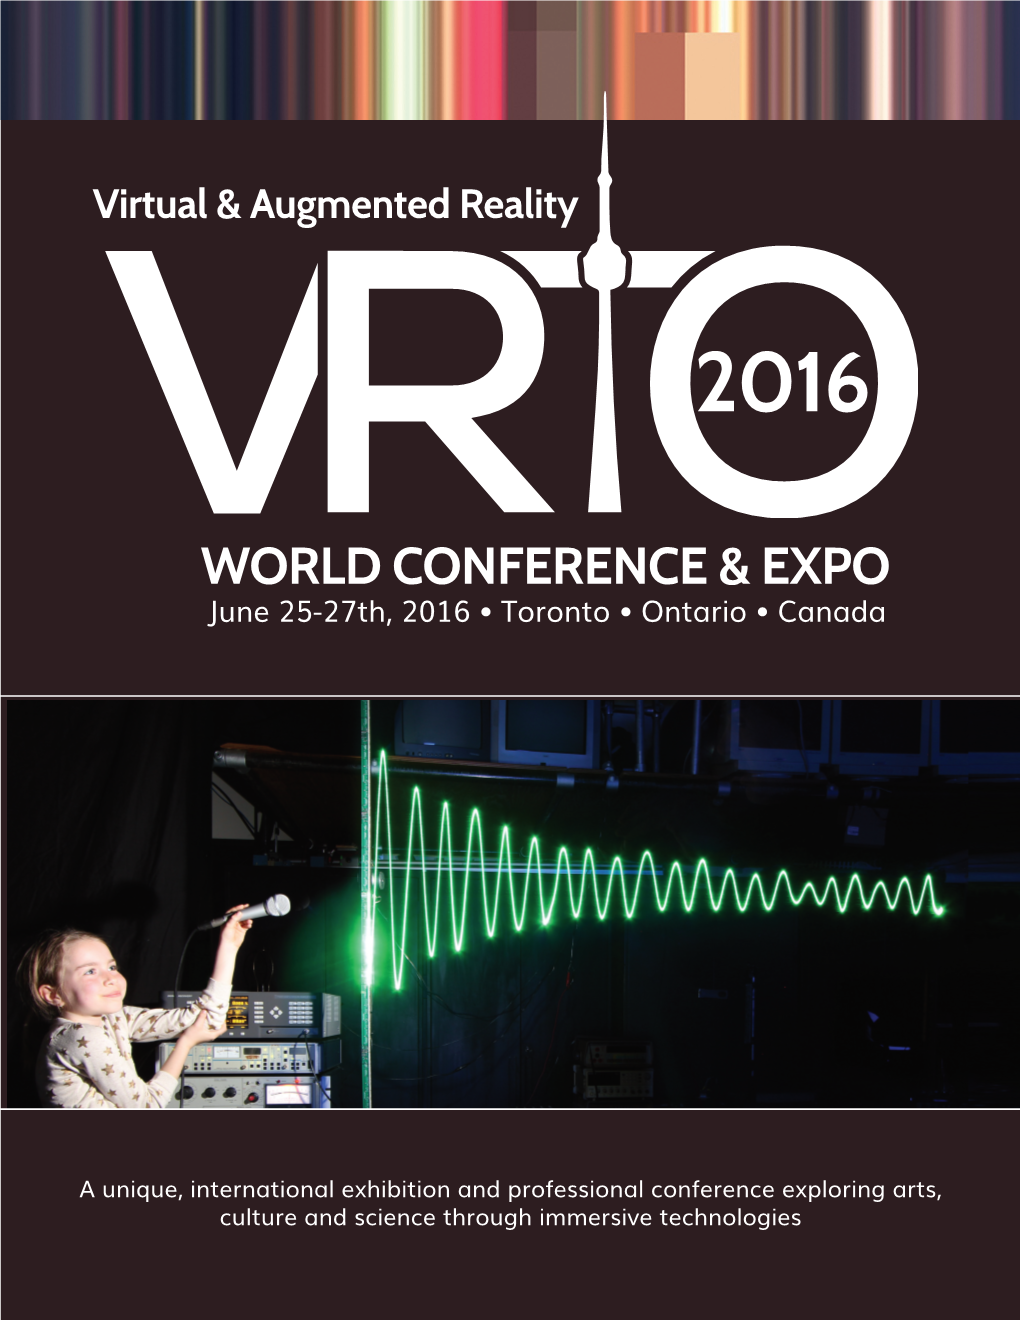 VRTO Conference & Expo 2016 Programme